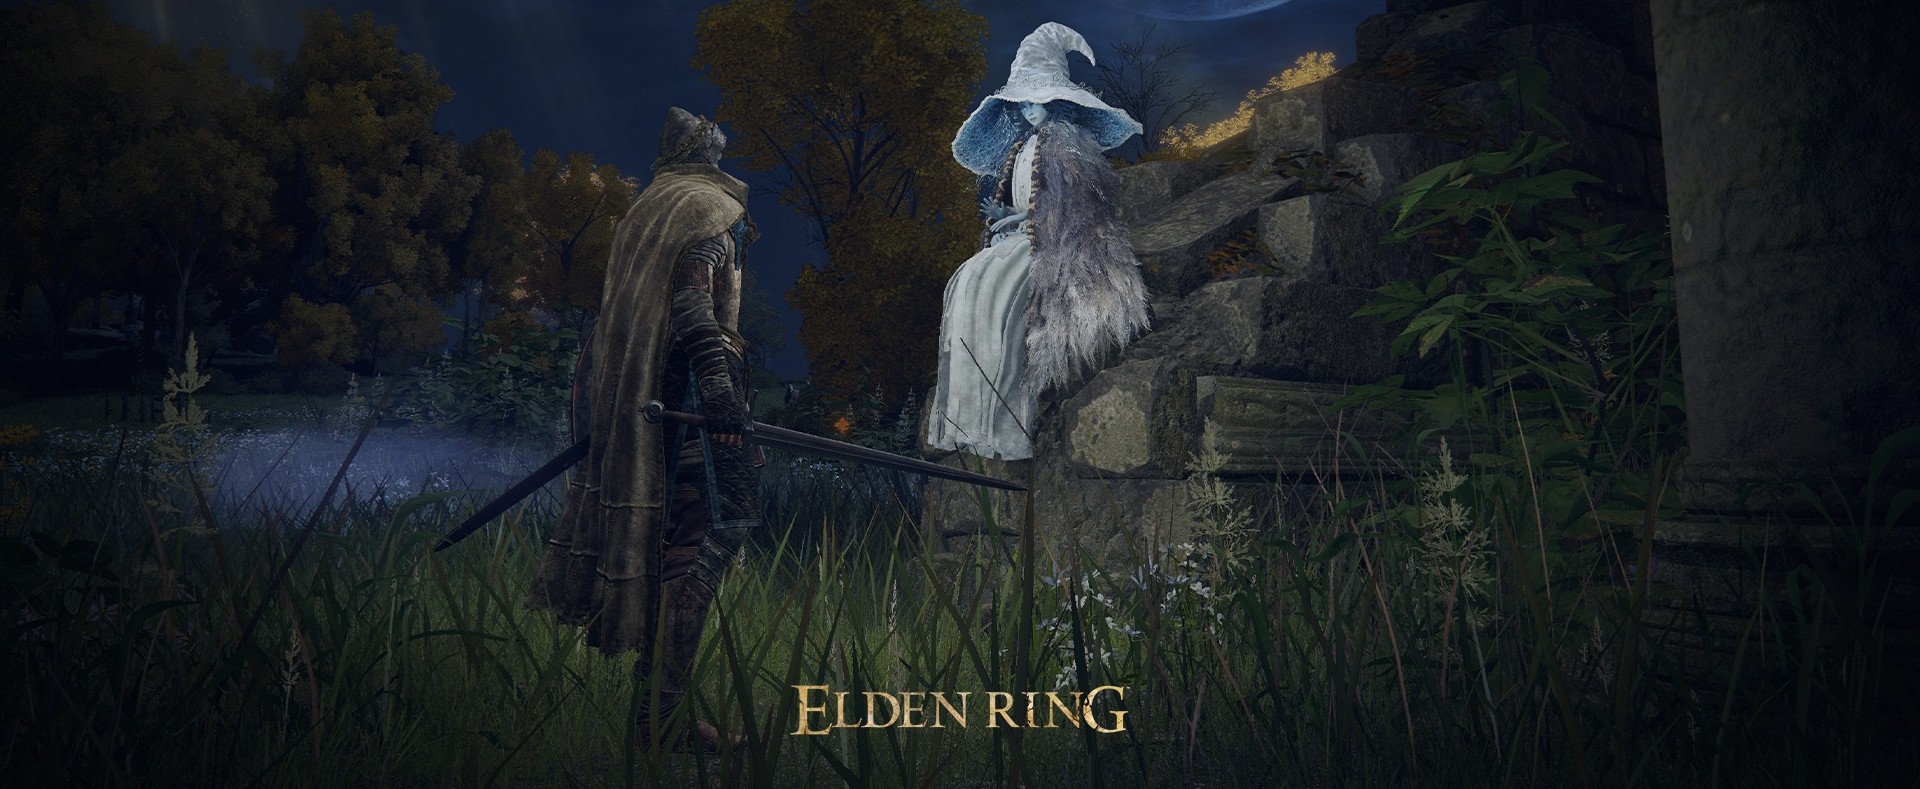 Elden Ring กลายเป็นหนึ่งในเกมที่มียอดผู้ชมวิดีโอทาง Youtube มากที่สุด